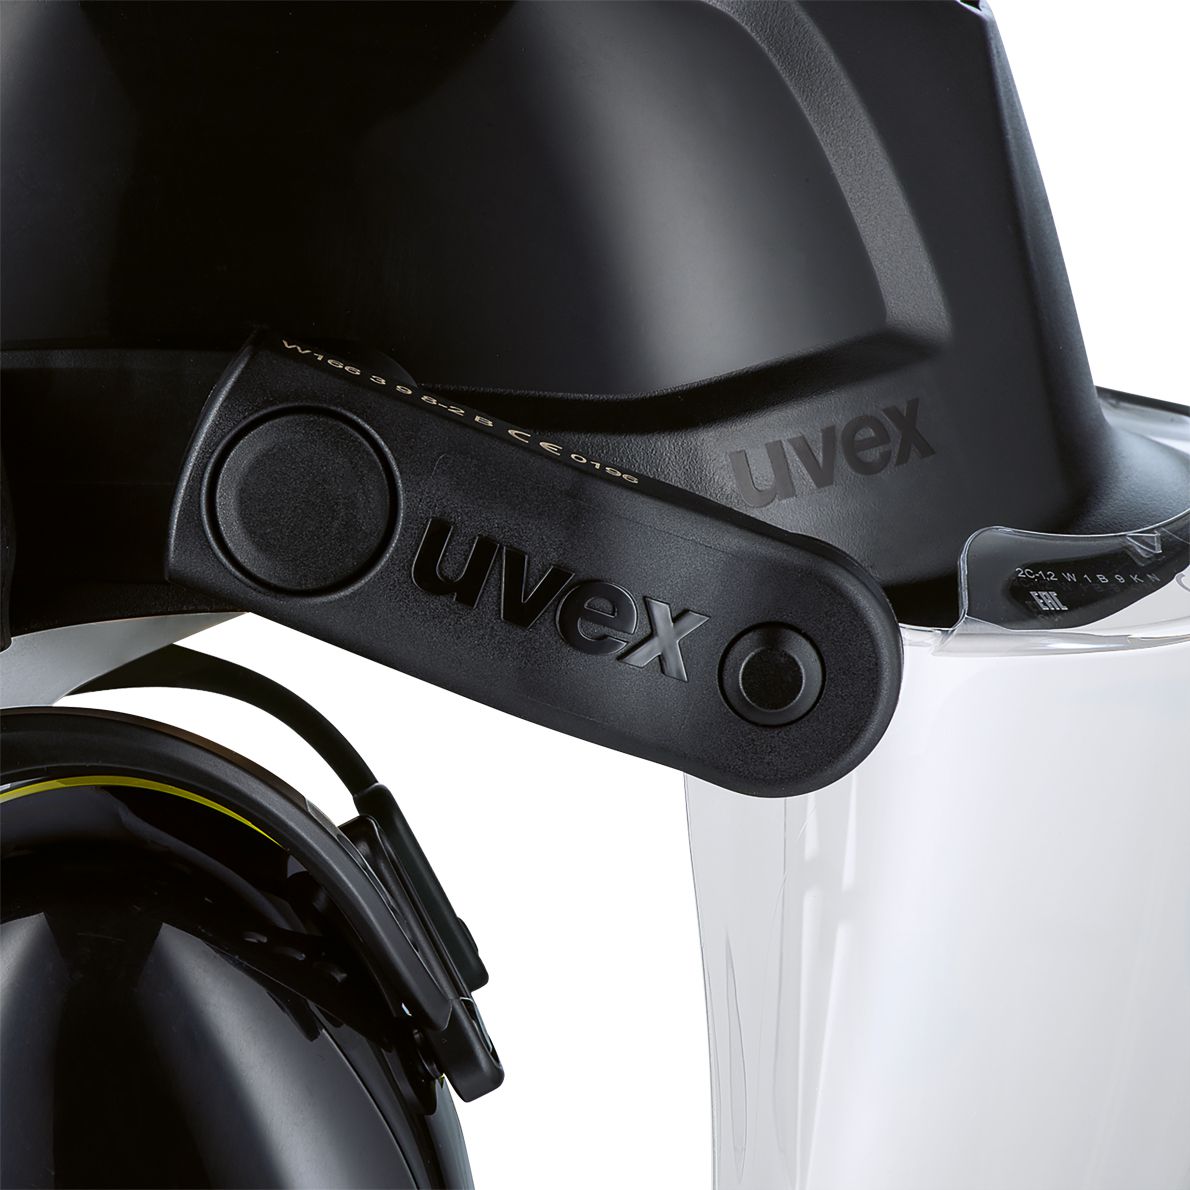 uvex pheos polycarbonate helmet visor - only for uvex pheos B-S-WR & pheos alpine - EN 166/170 - anti-fog & scratch-resistant